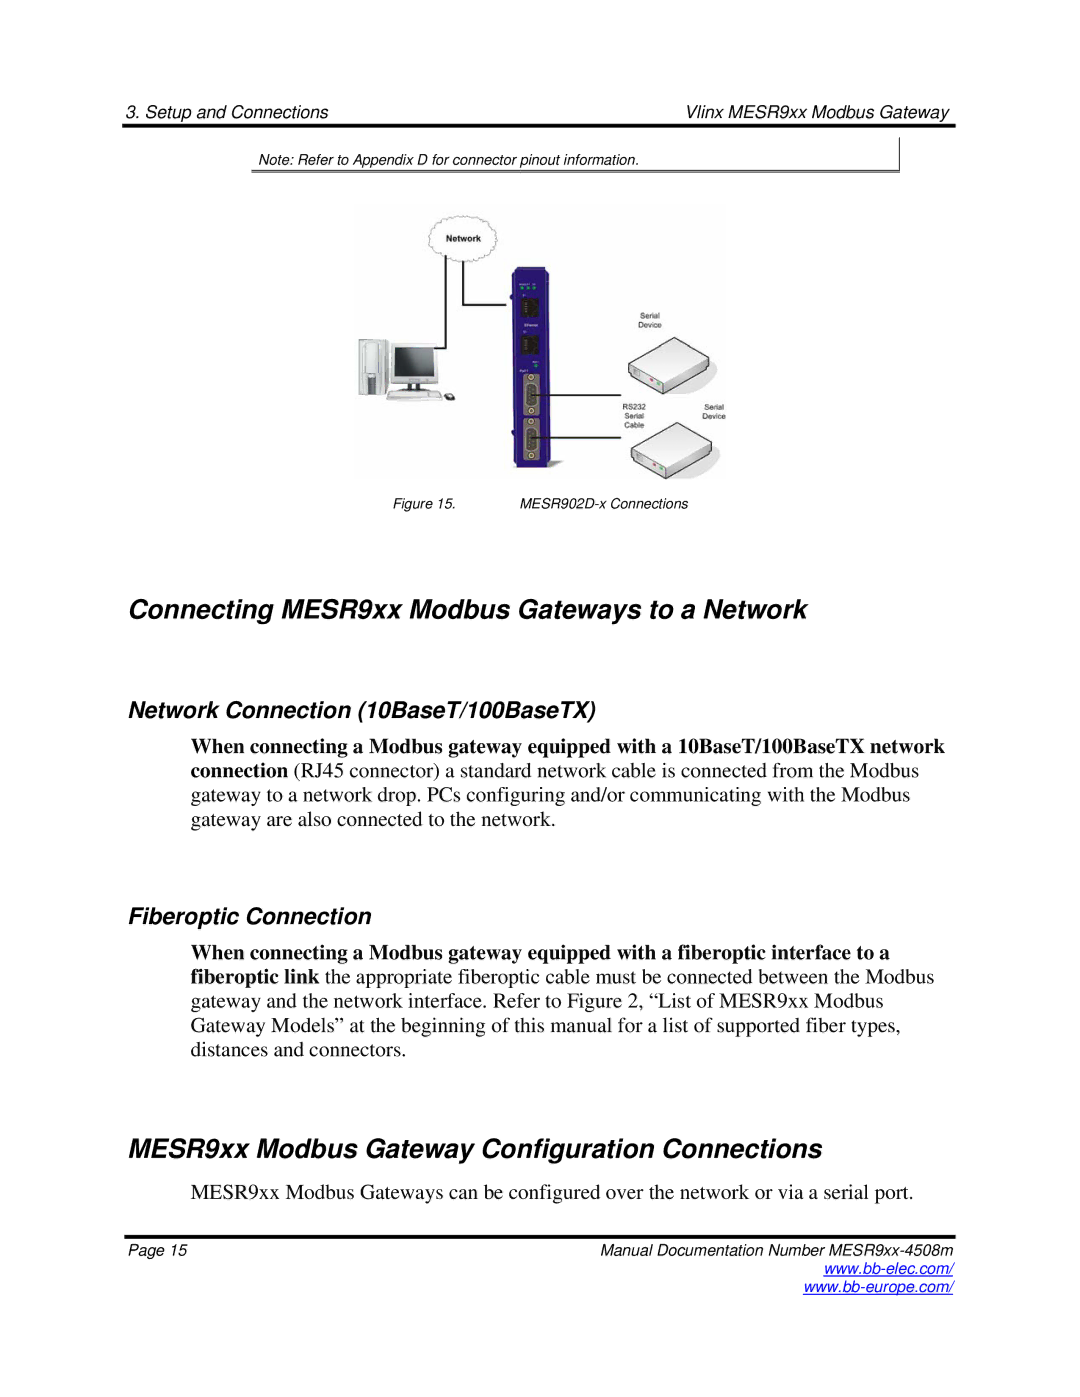 B&B Electronics manual Connecting MESR9xx Modbus Gateways to a Network, MESR9xx Modbus Gateway Configuration Connections 